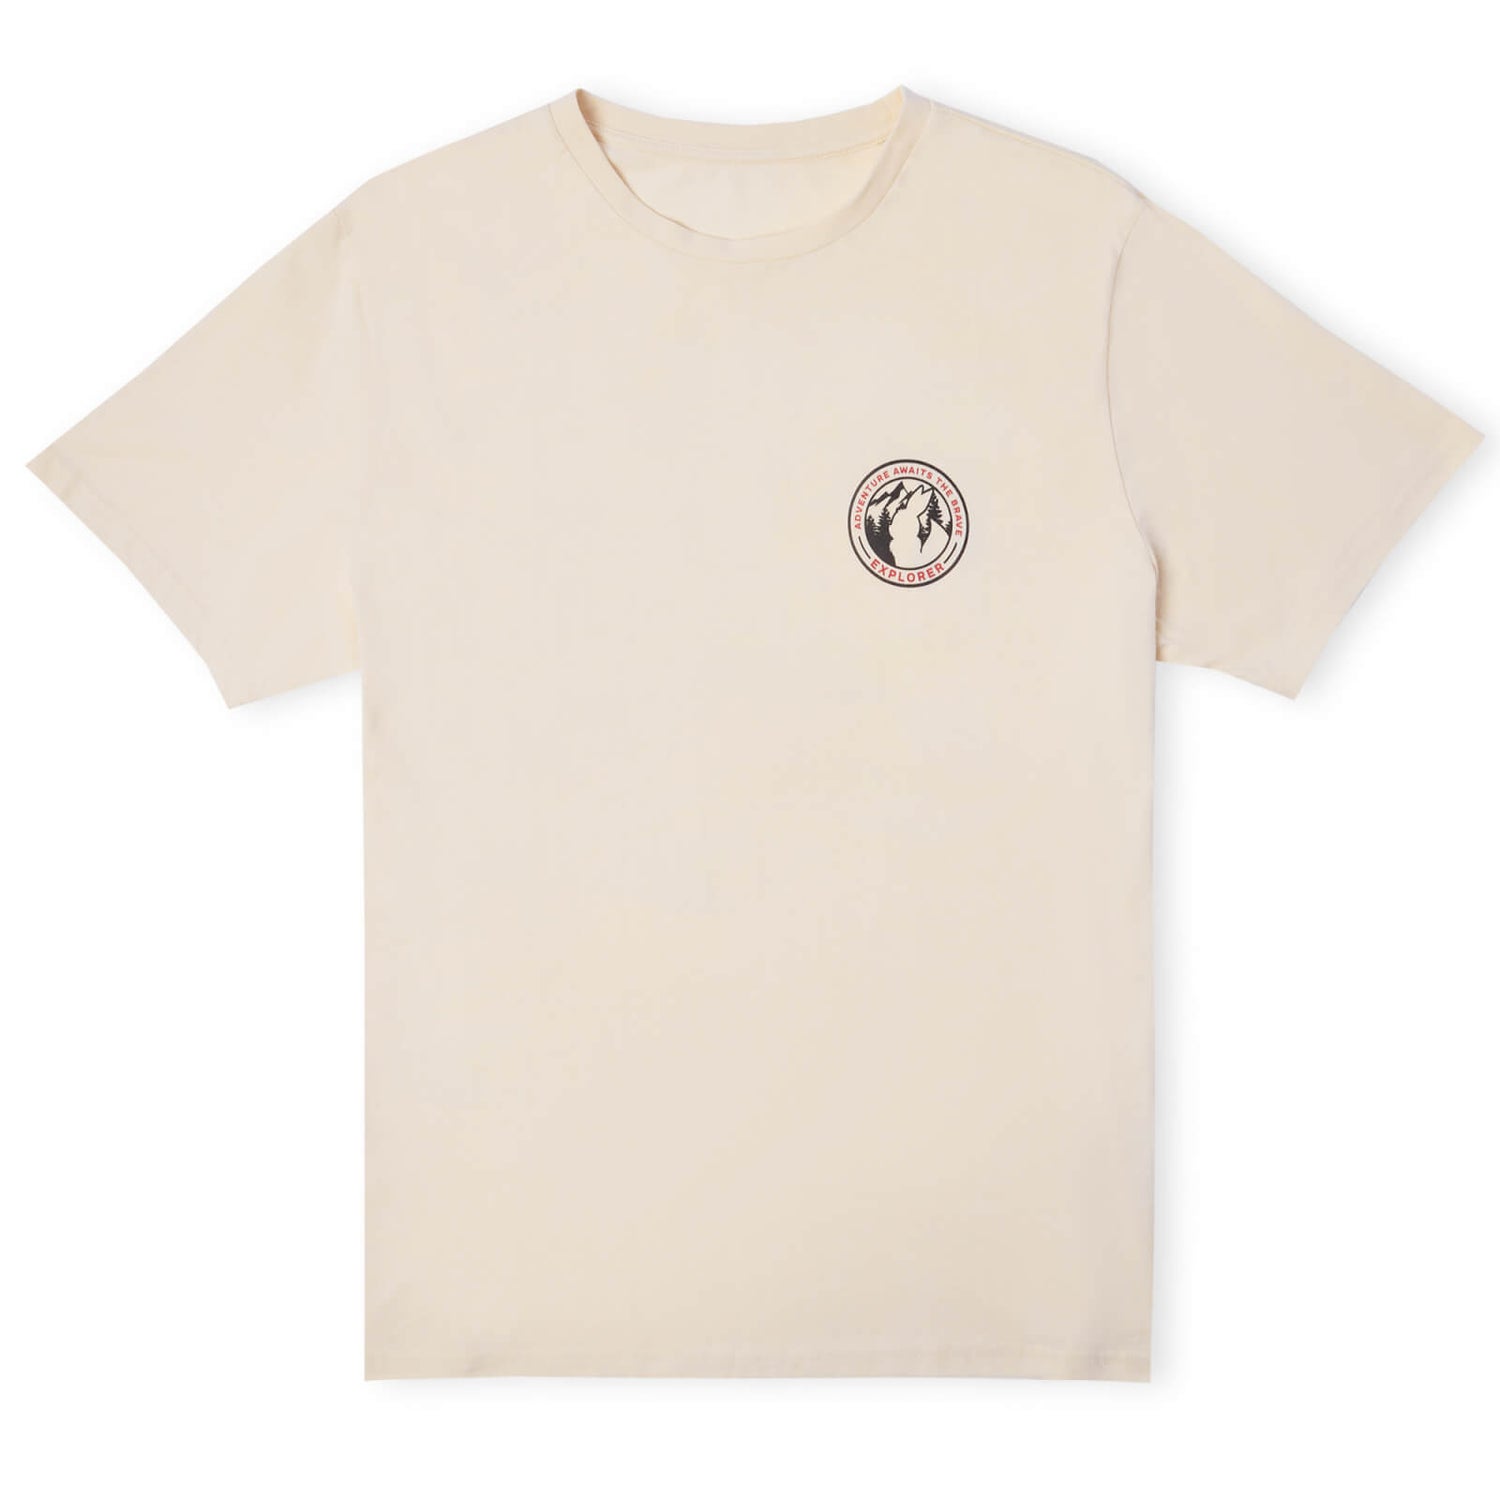 Pokemon The Road Less Travelled Men's T-Shirt - Cream - XL - beige